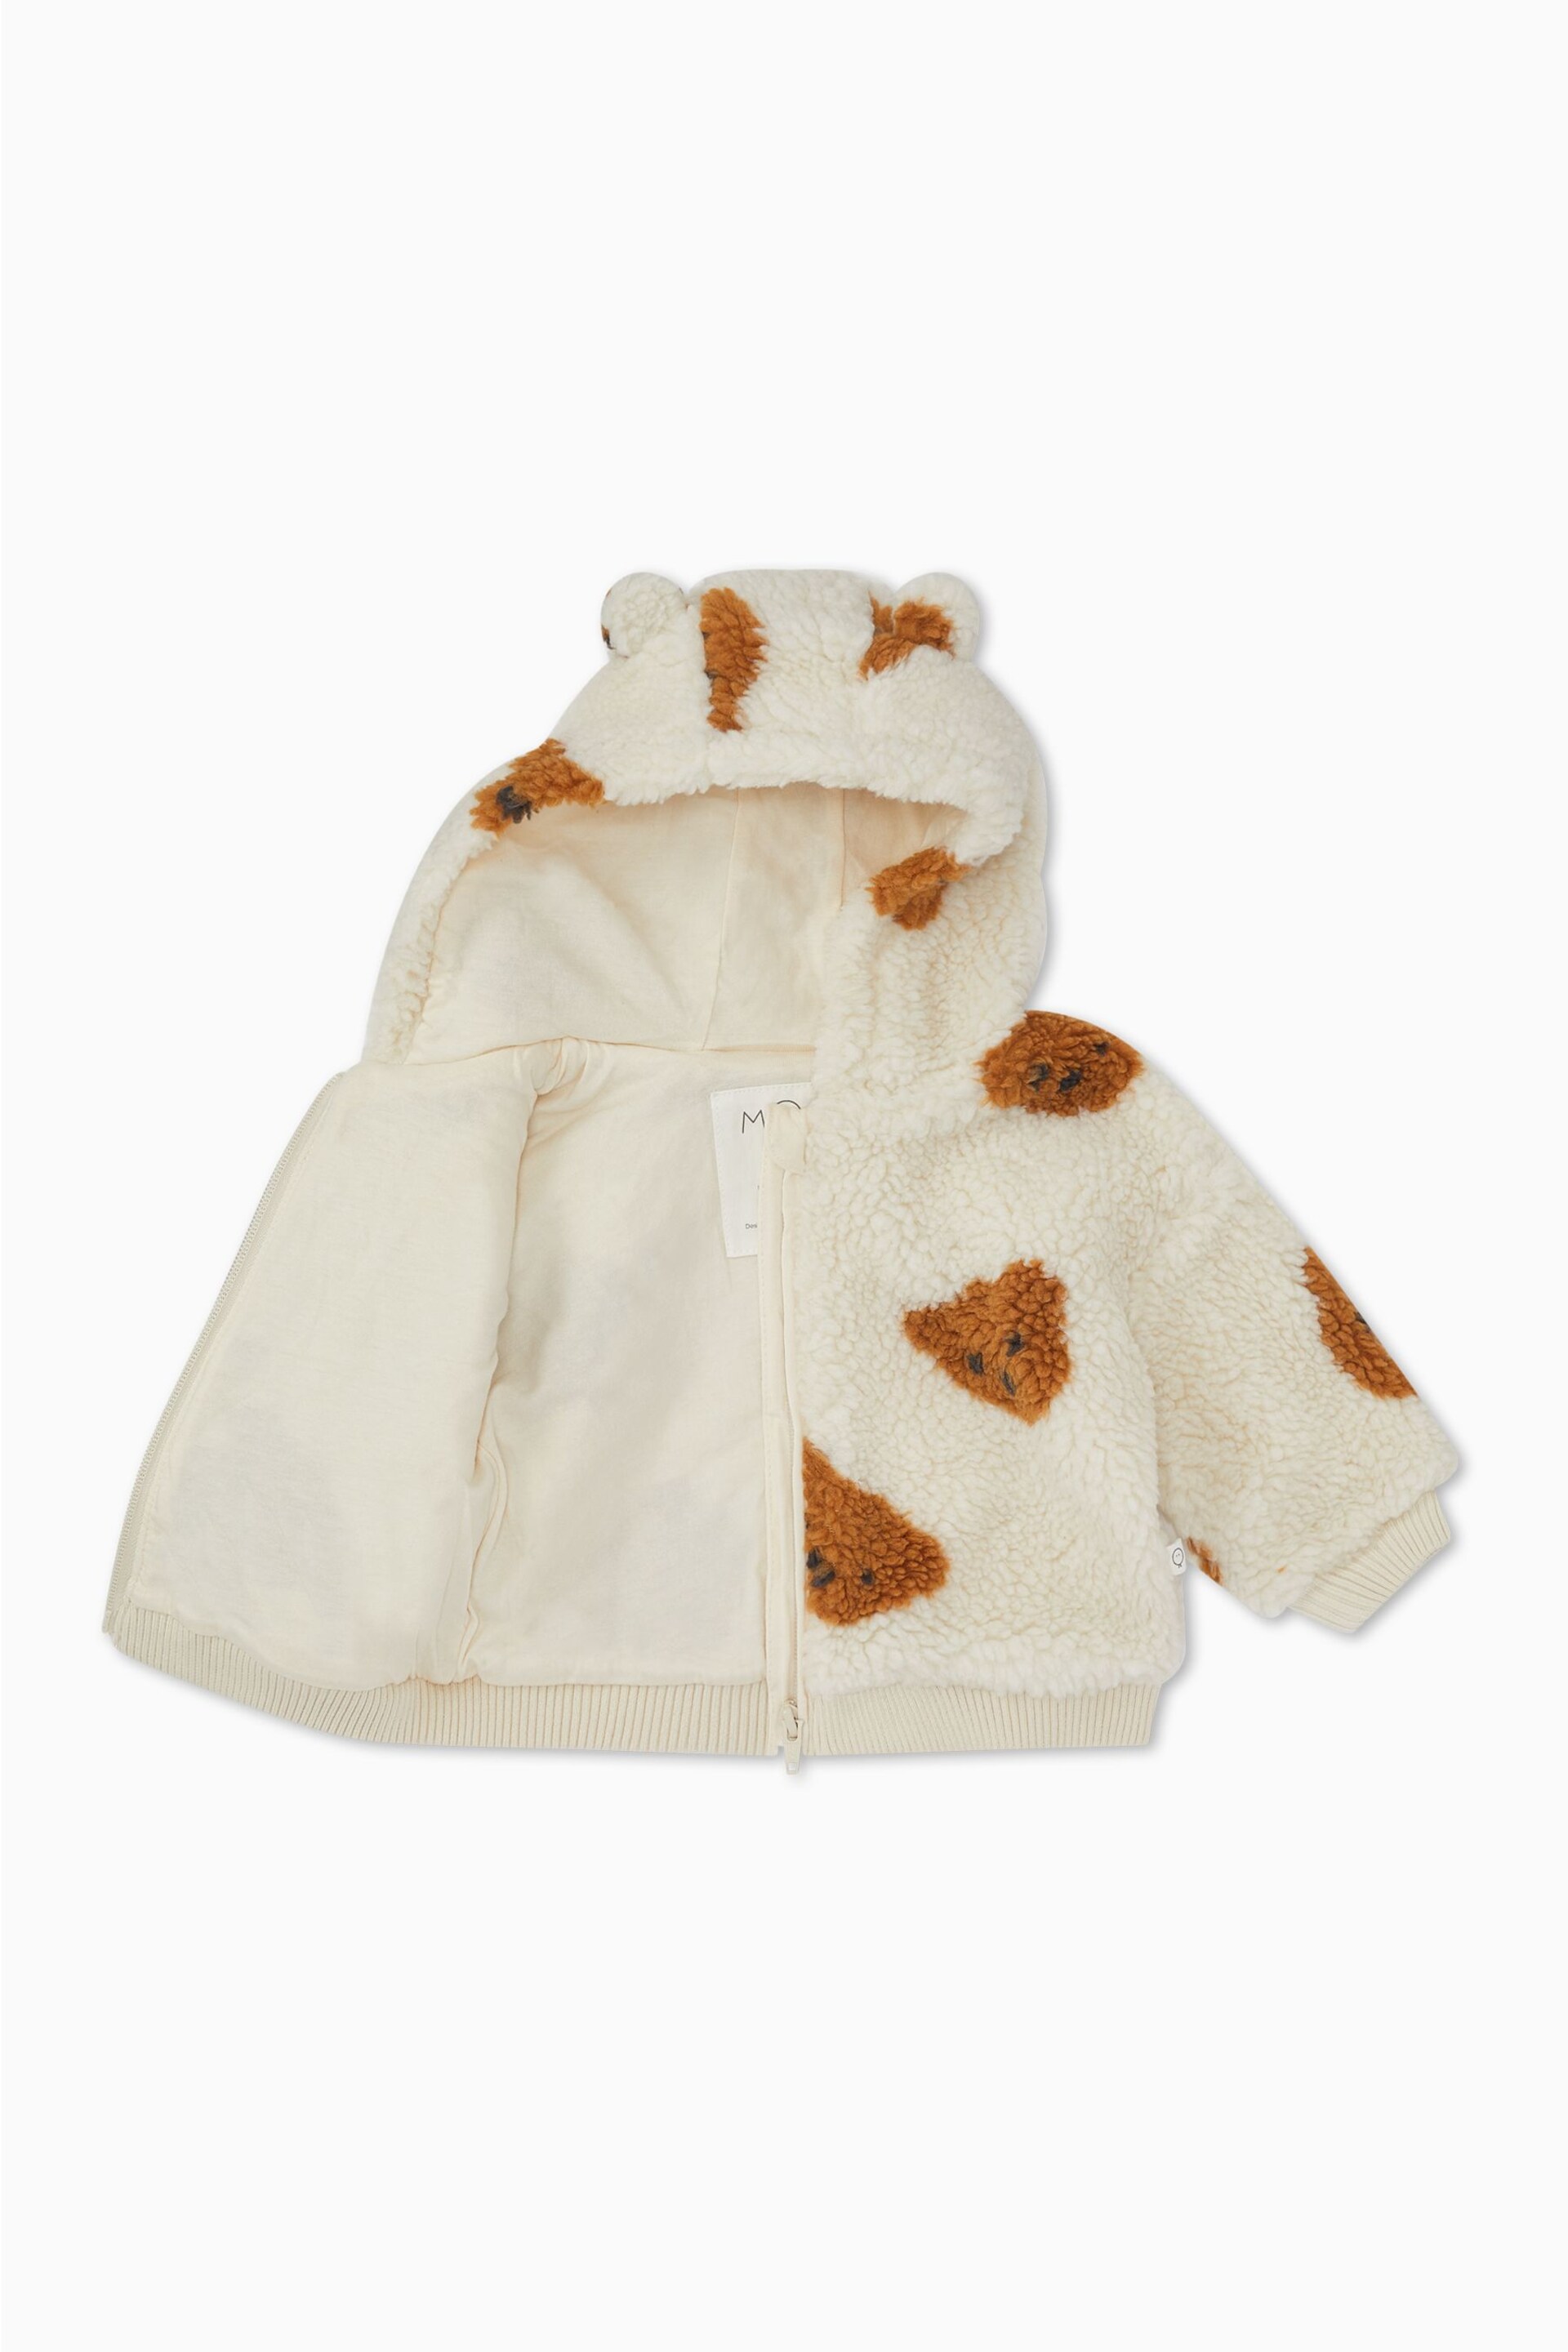 MORI Cream Recycled Sherpa Teddy Bear Cosy Jacket - Image 5 of 6